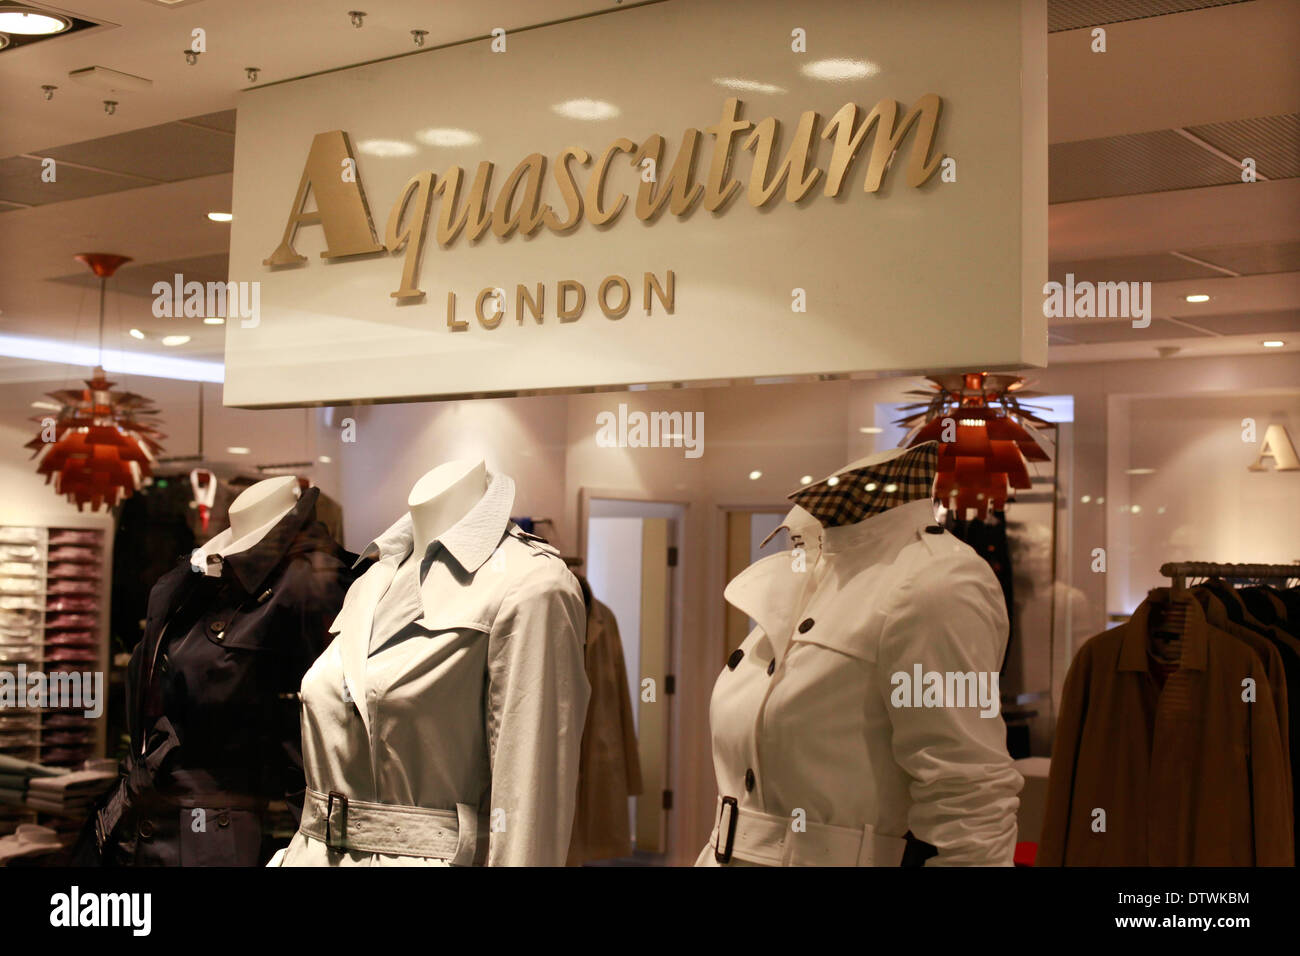 Aquascutum shop is seen at Canary Wharf Stock Photo - Alamy